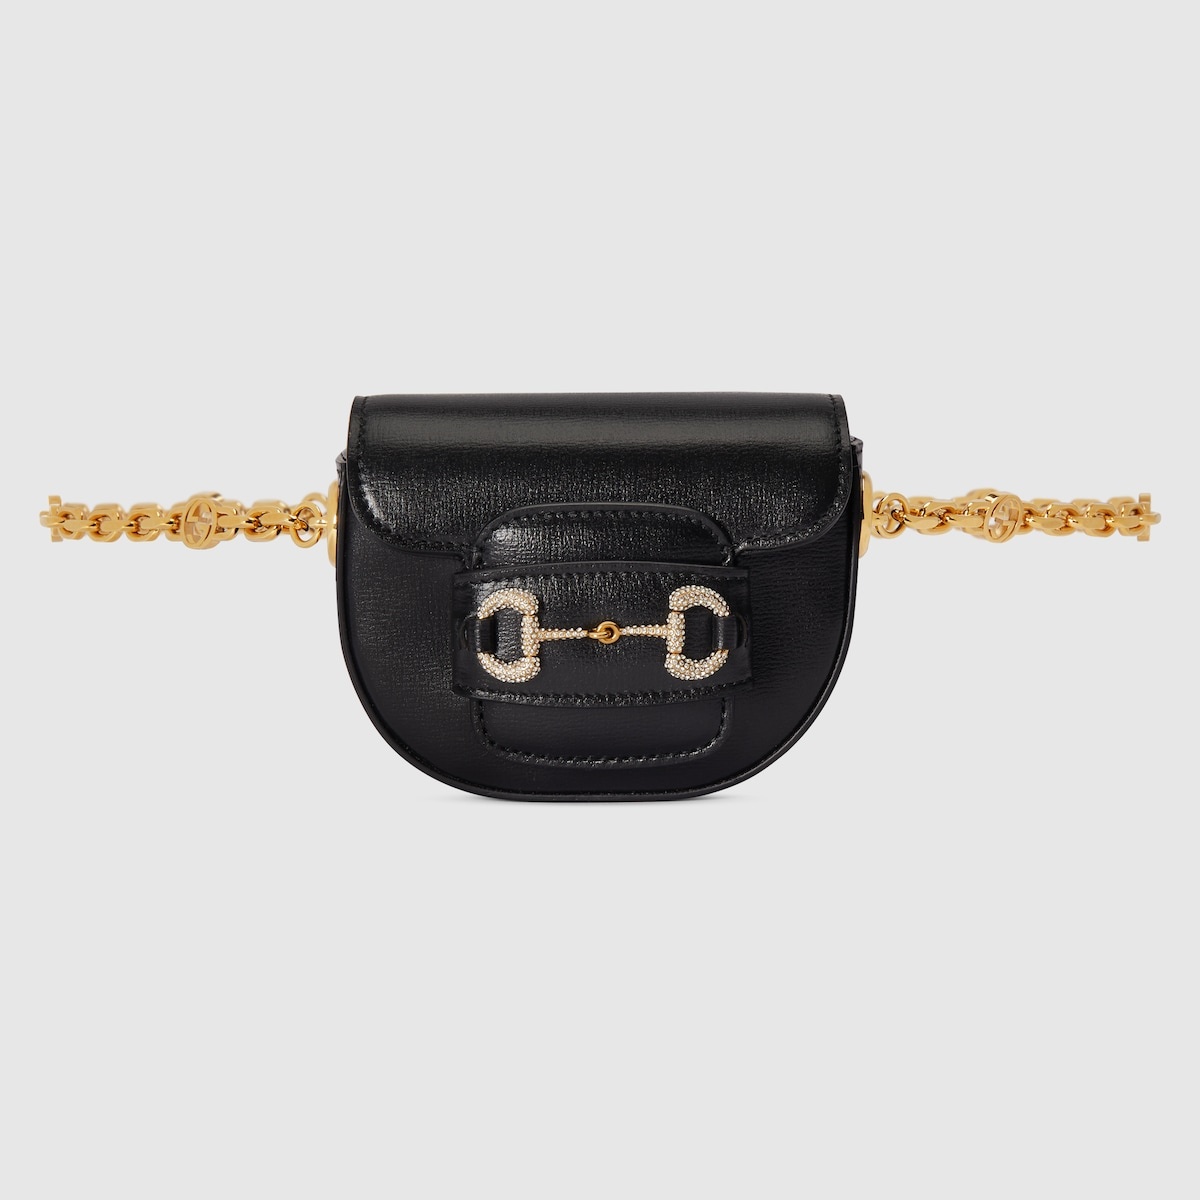 Gucci Horsebit 1955 rounded belt bag - 5